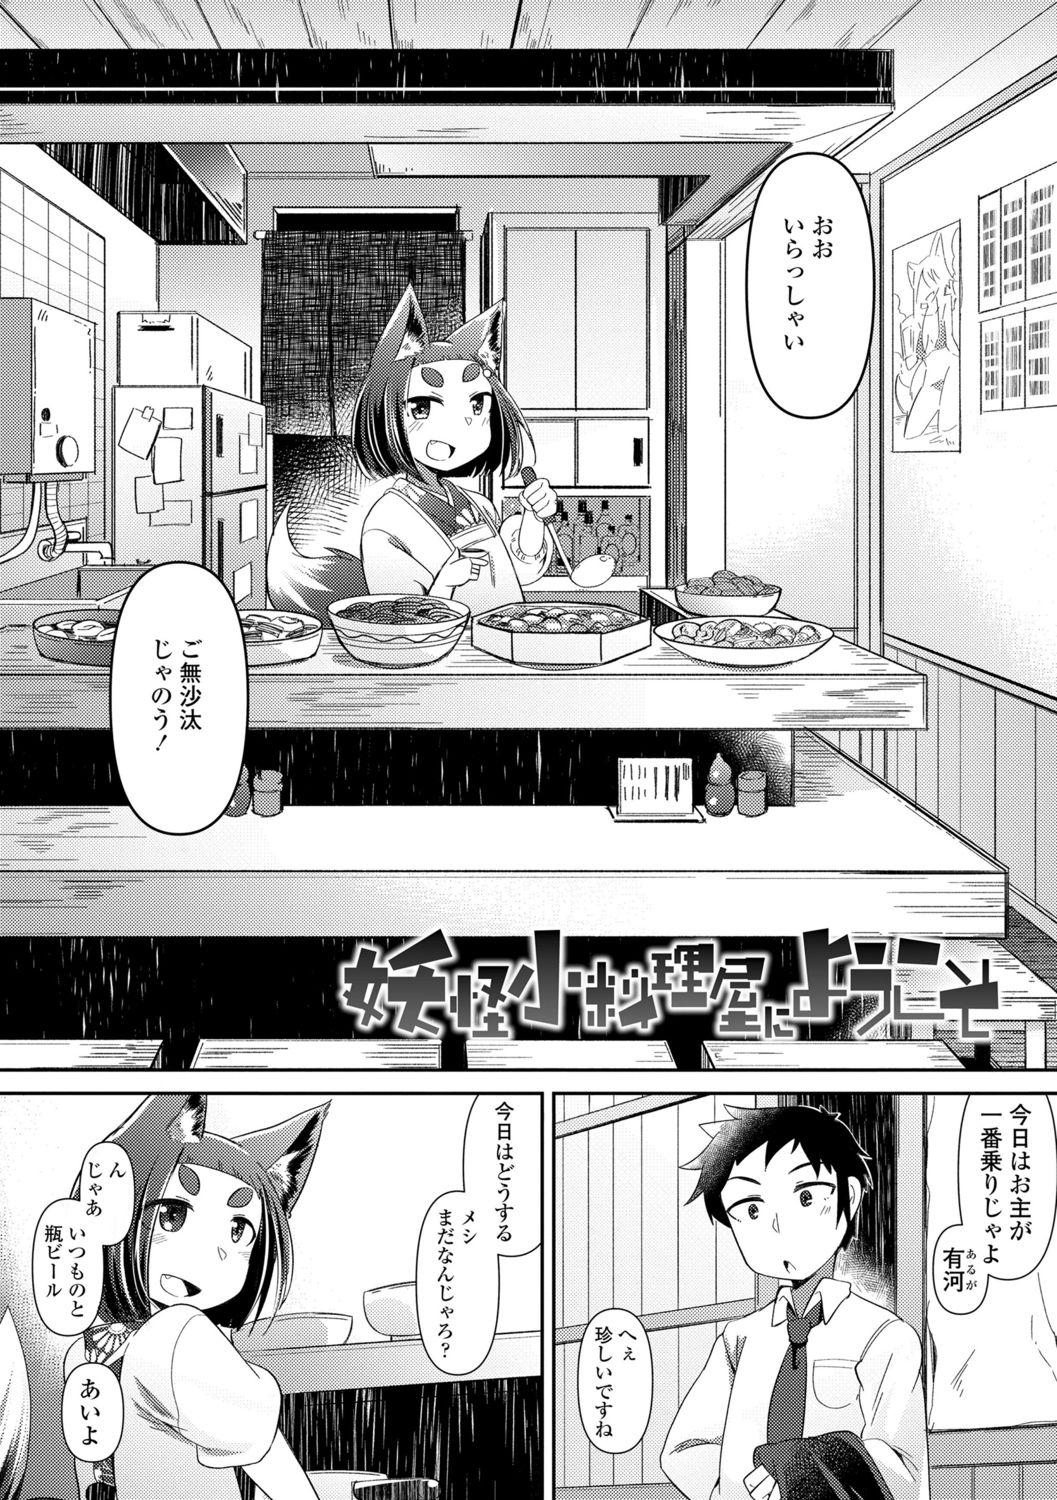 Fetiche Youkai Koryouriya ni Youkoso - Welcome to apparition small restaurant Fleshlight - Page 8